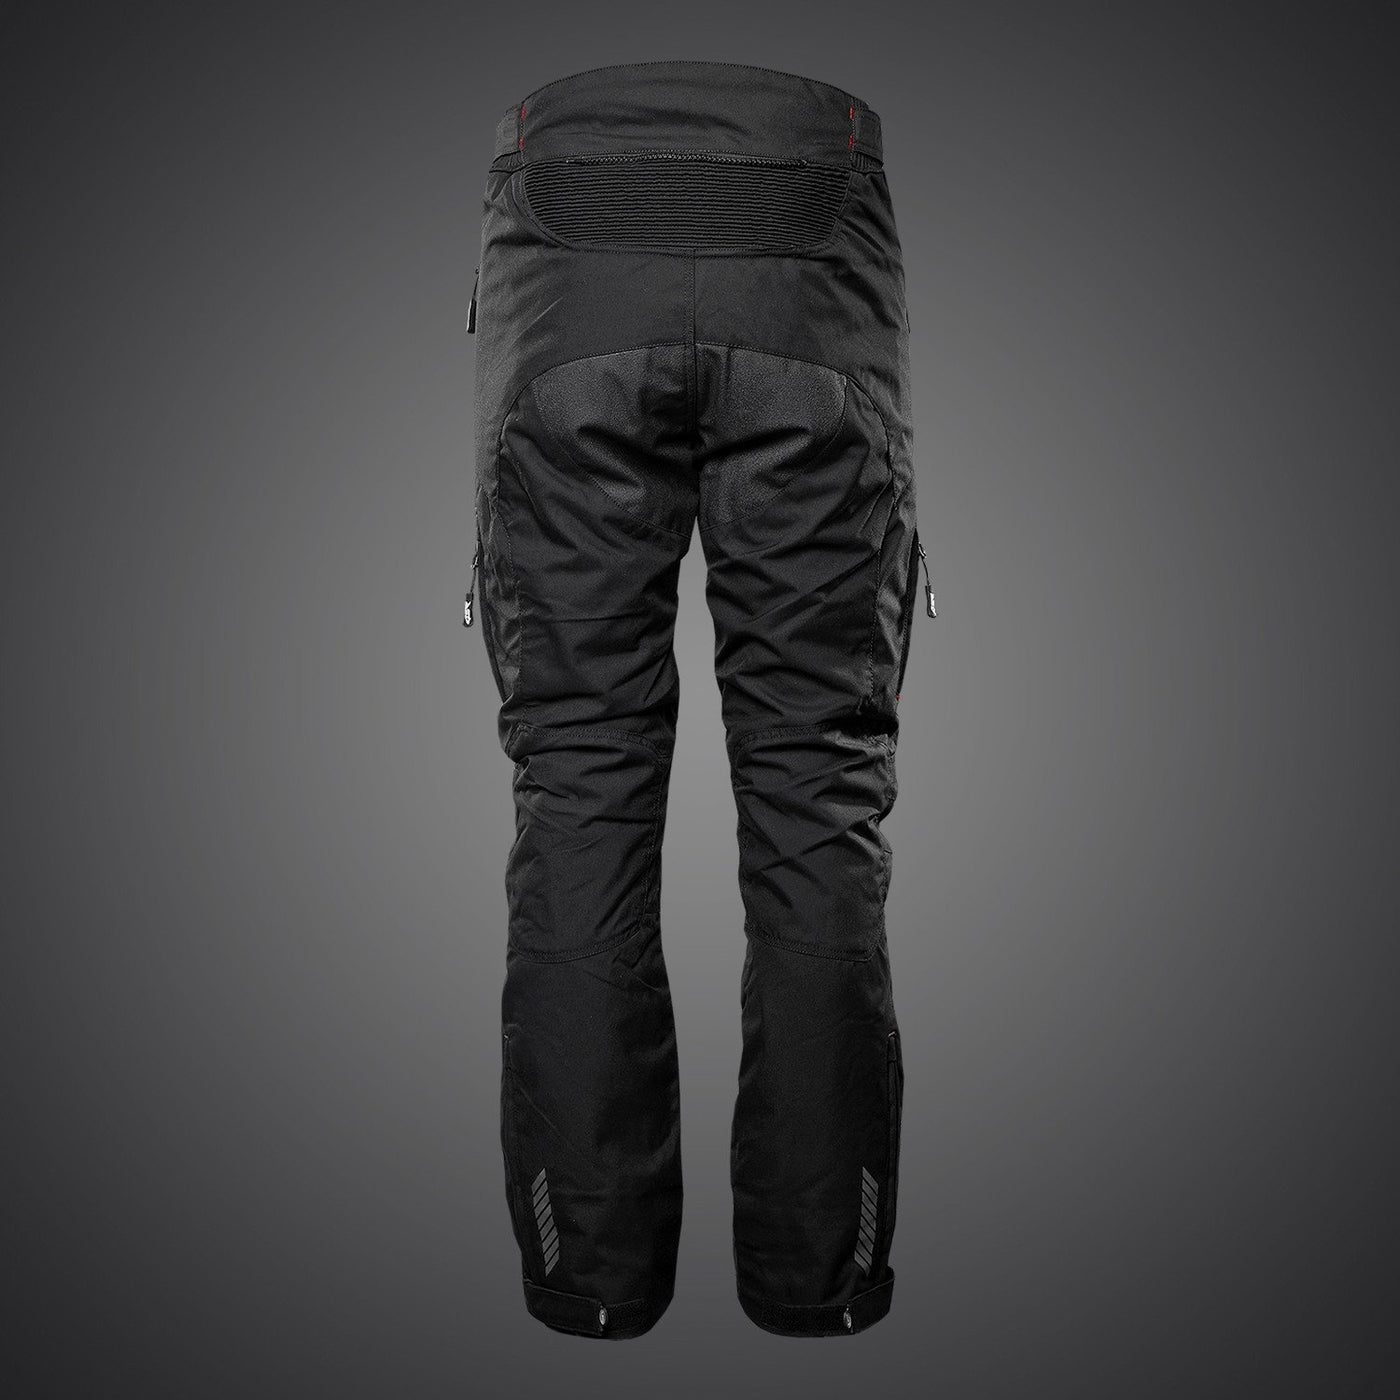 4SR motorcycle pants